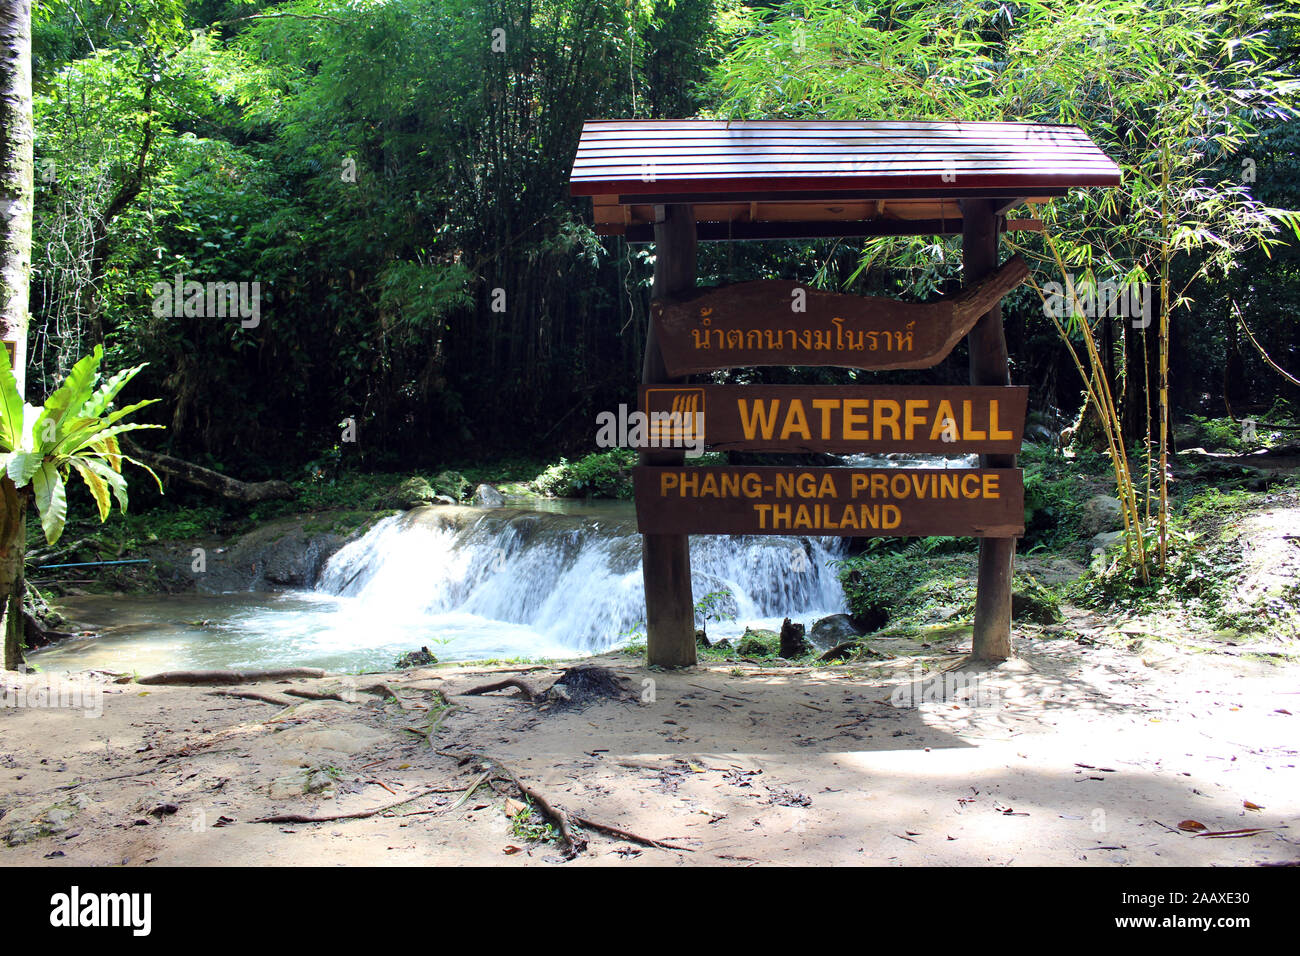 Signo de la Cascada del Parque Nacional de la bahía de Phang Nga Thailand Foto de stock